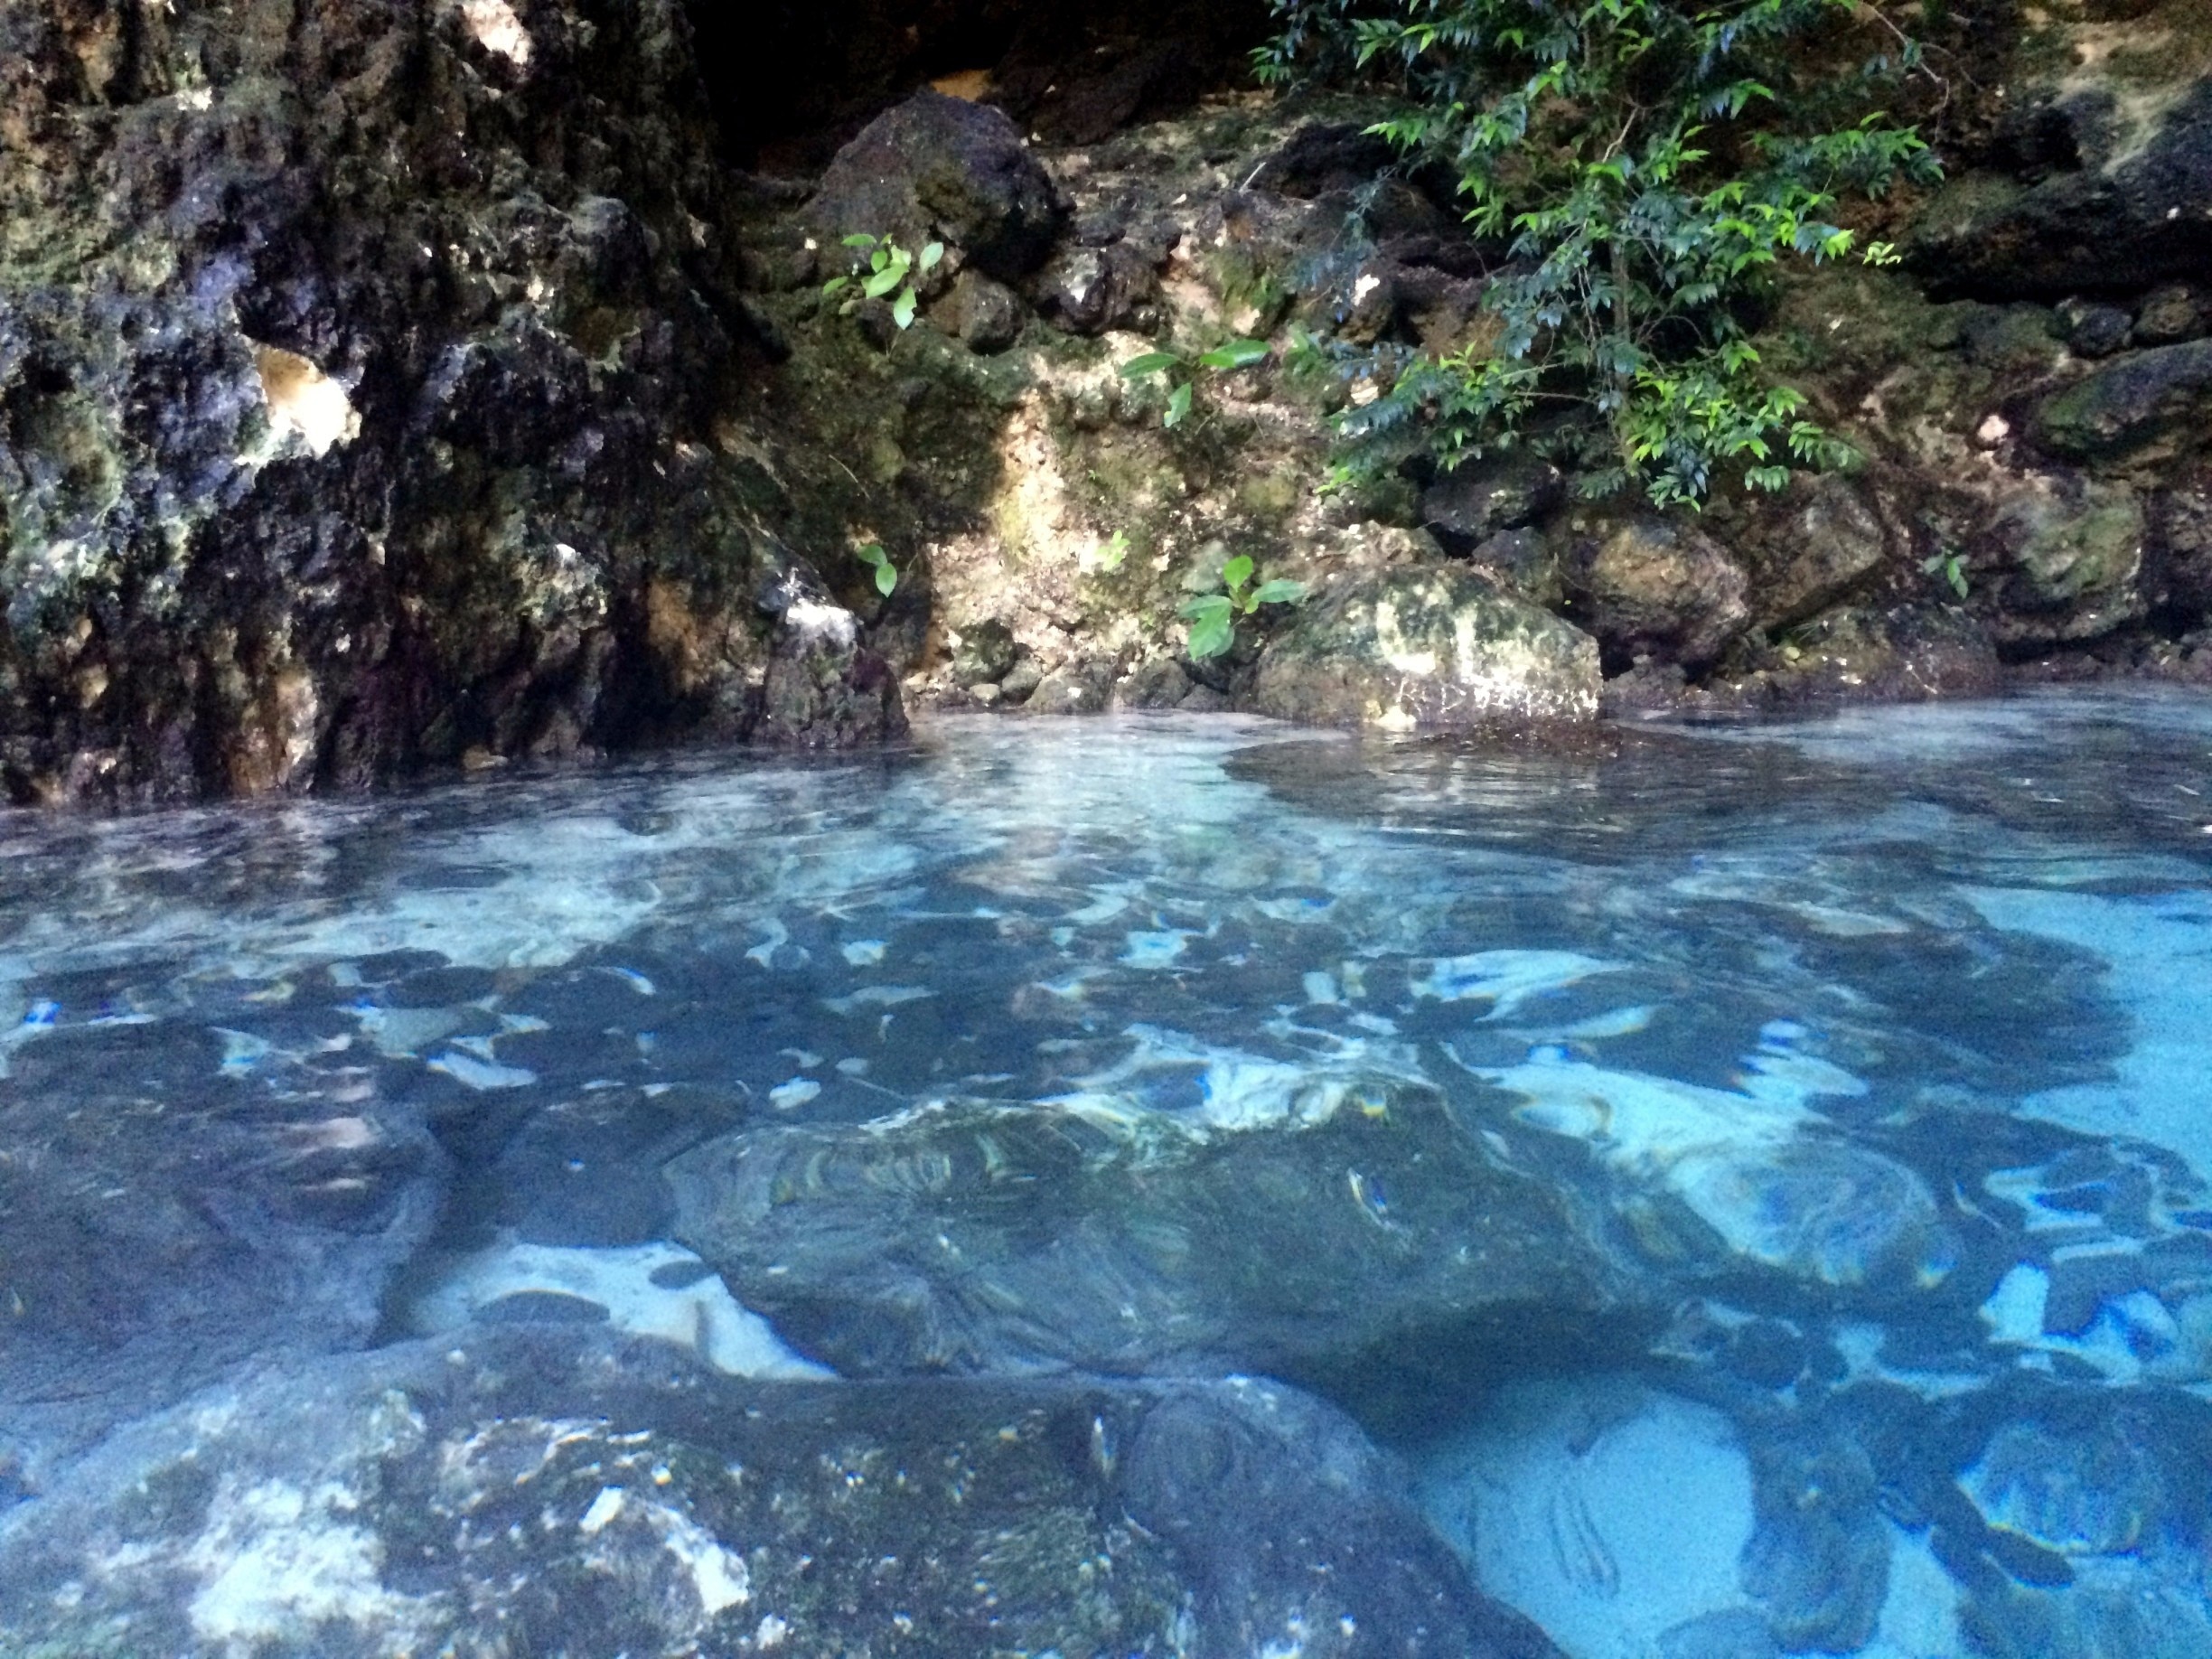 Took an eco tour in Punta Cana to Hoyo Azul for a swim in the natural lagoon. Beautiful and fun experience!
More info: http://www.badsentences.com/hoyo-azul-dominican-republic/